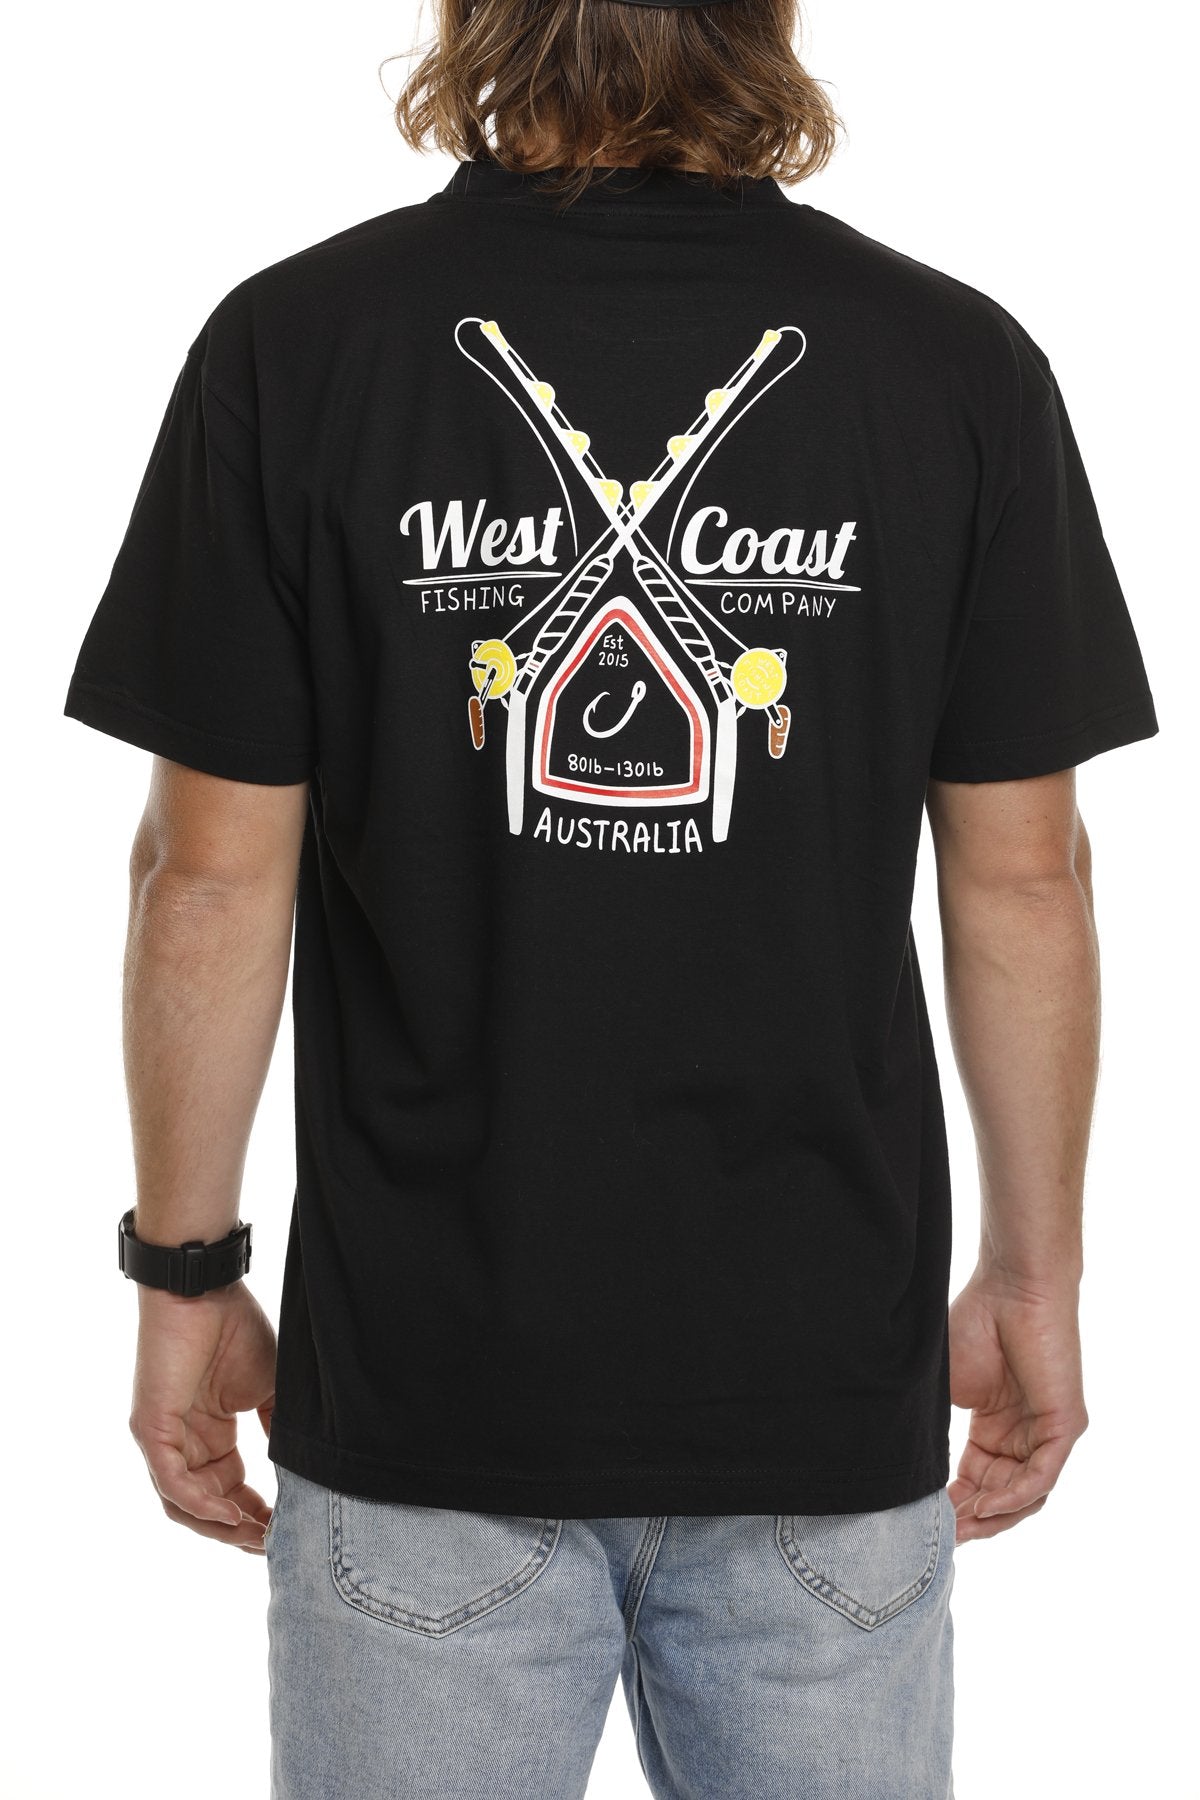 West Coast Fishing Co Heavy Tackle Tee Black